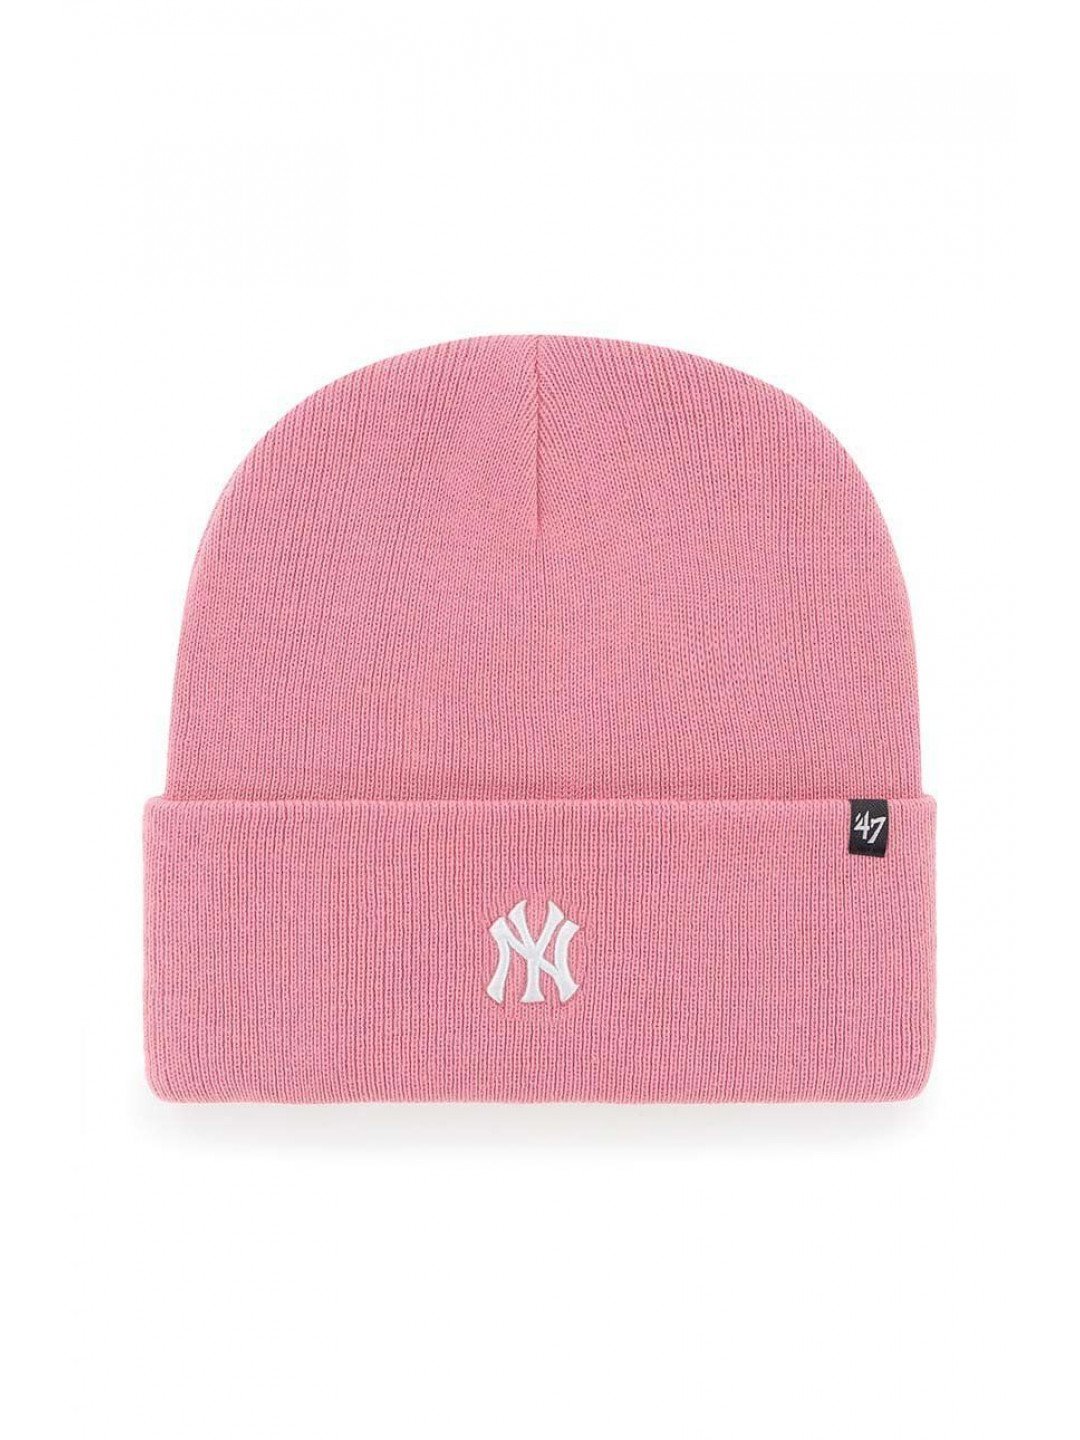 Čepice 47brand Mlb New York Yankees růžová barva